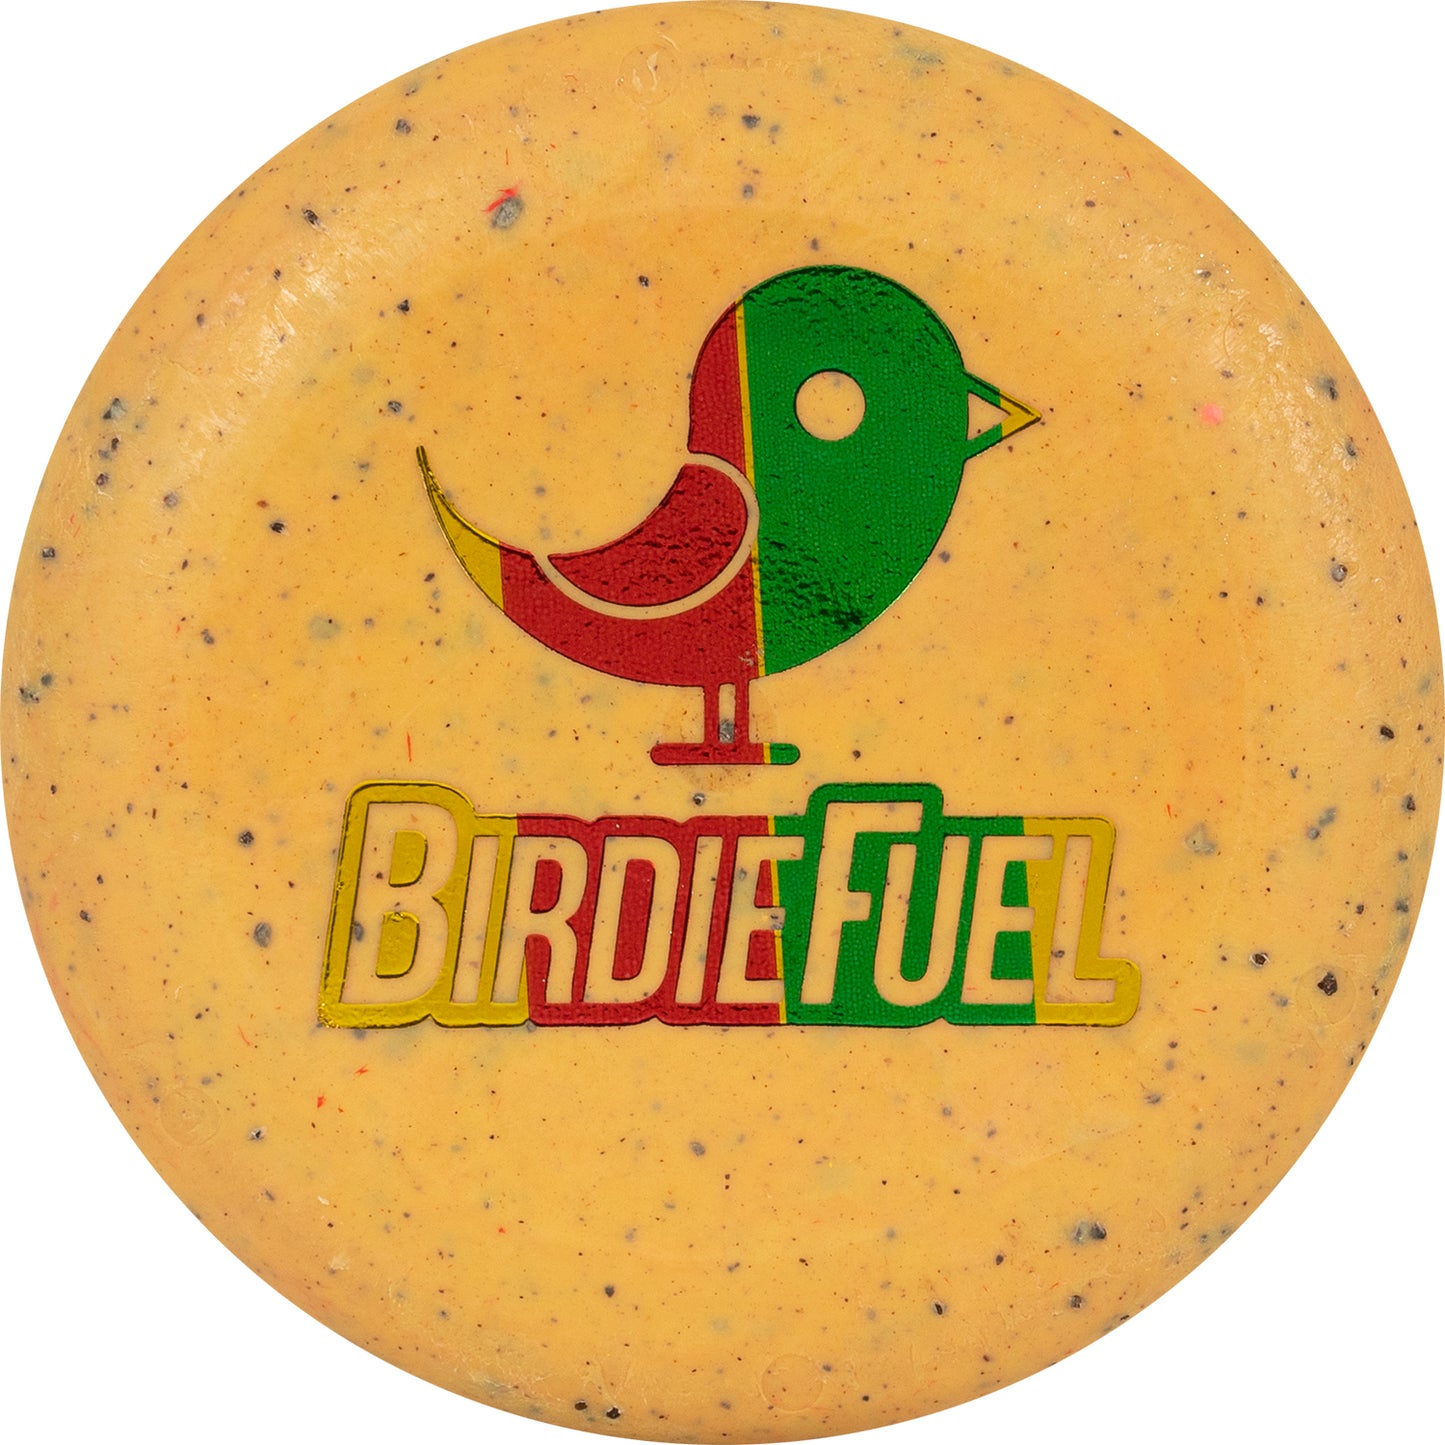 BirdieFuel Coffee-Scented Mini Disc